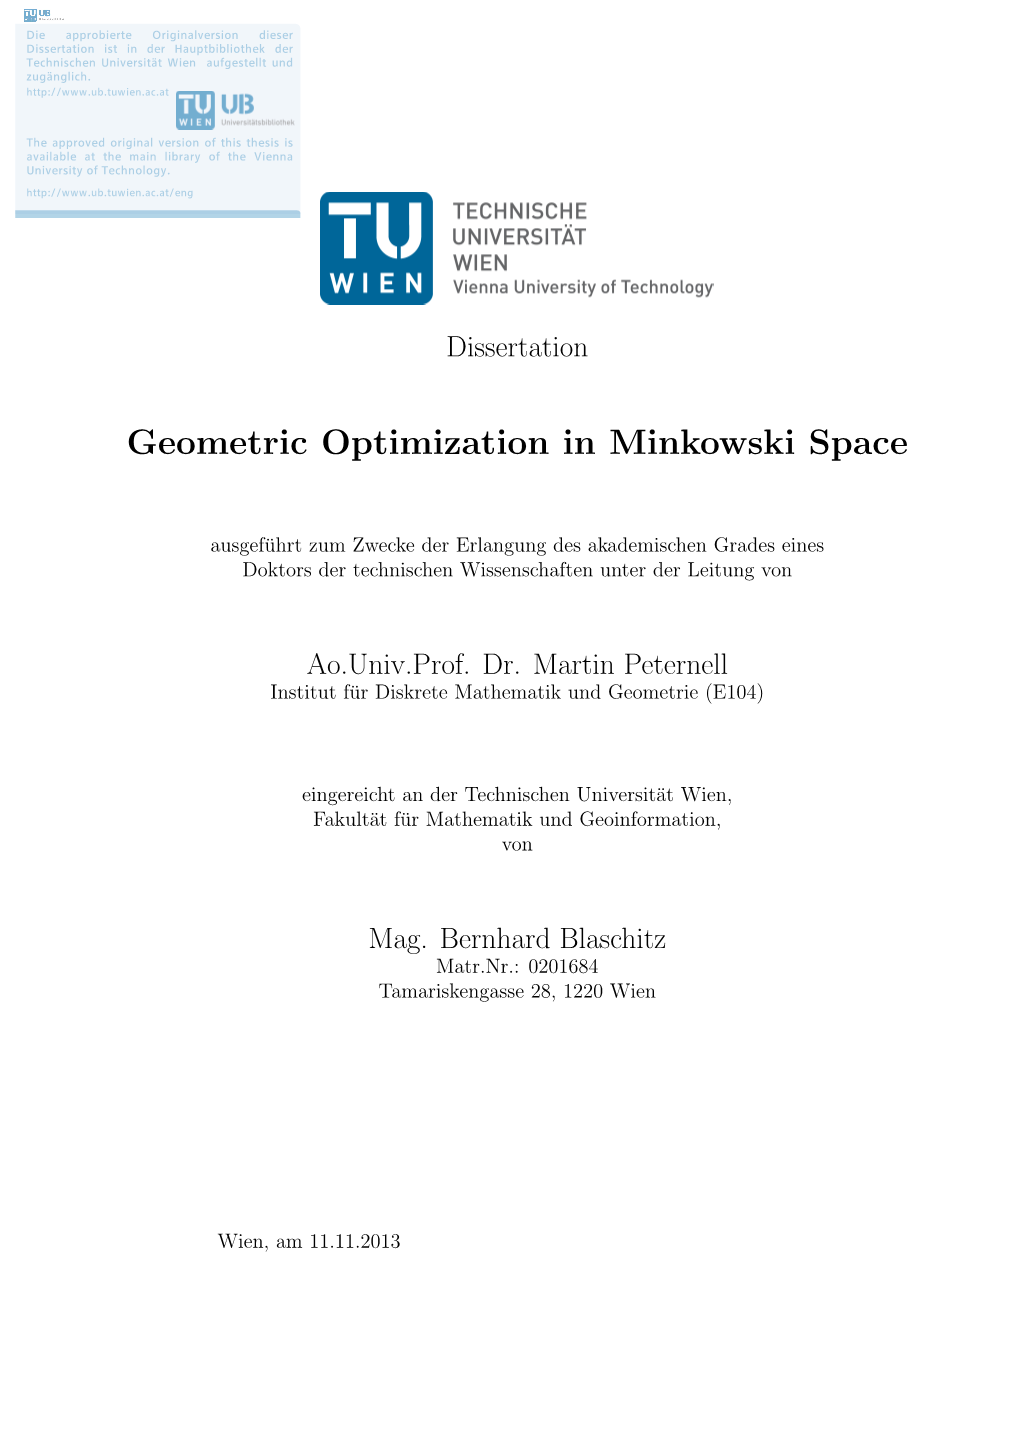 Geometric Optimization in Minkowski Space